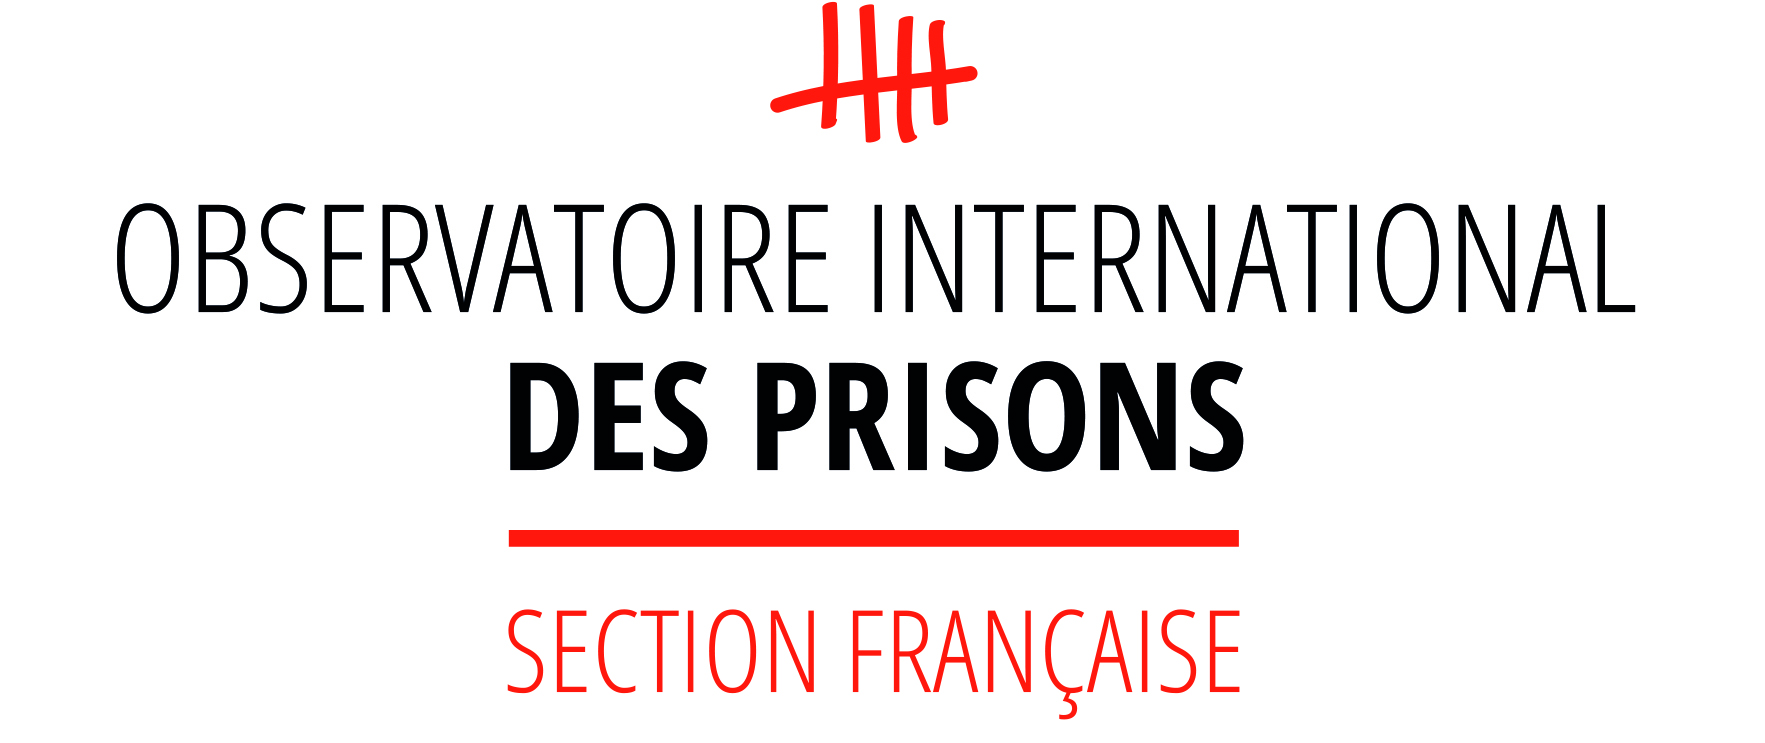 Internet En Prison - Observatoire international des prisons-section française